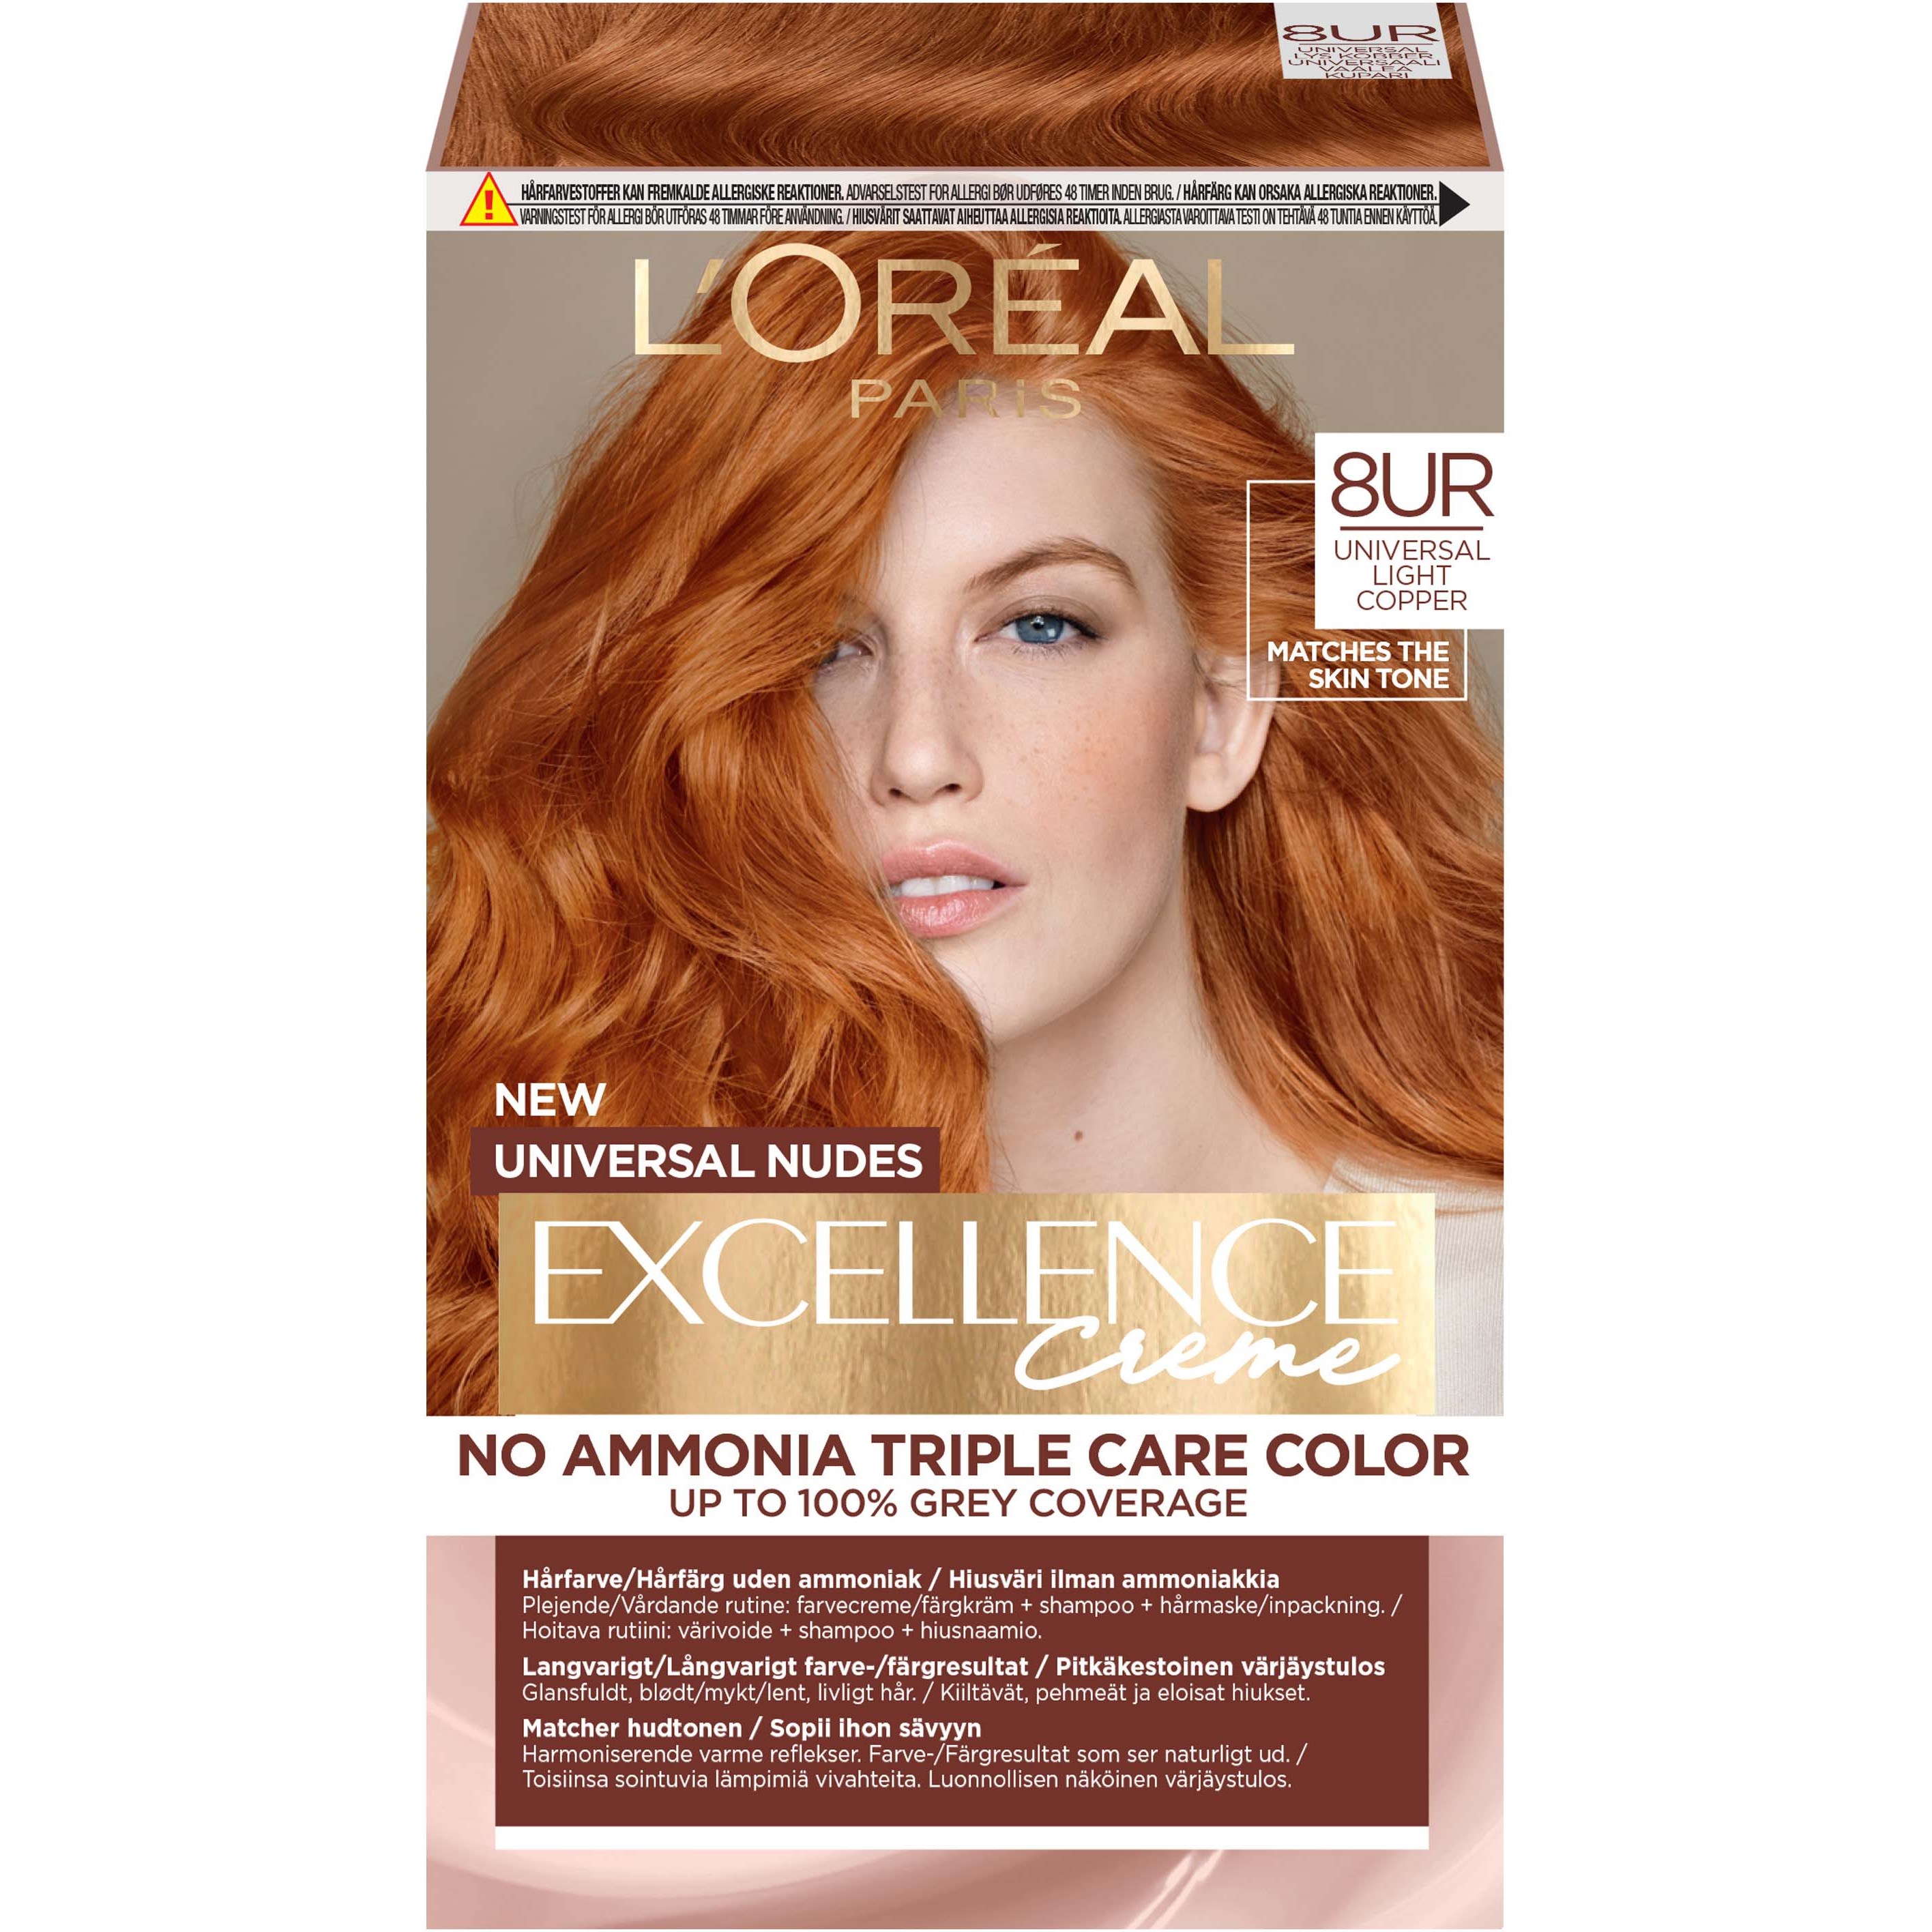 Bilde av Loreal Paris Excellence Creme Universal Nudes Hair Color 8ur Universal